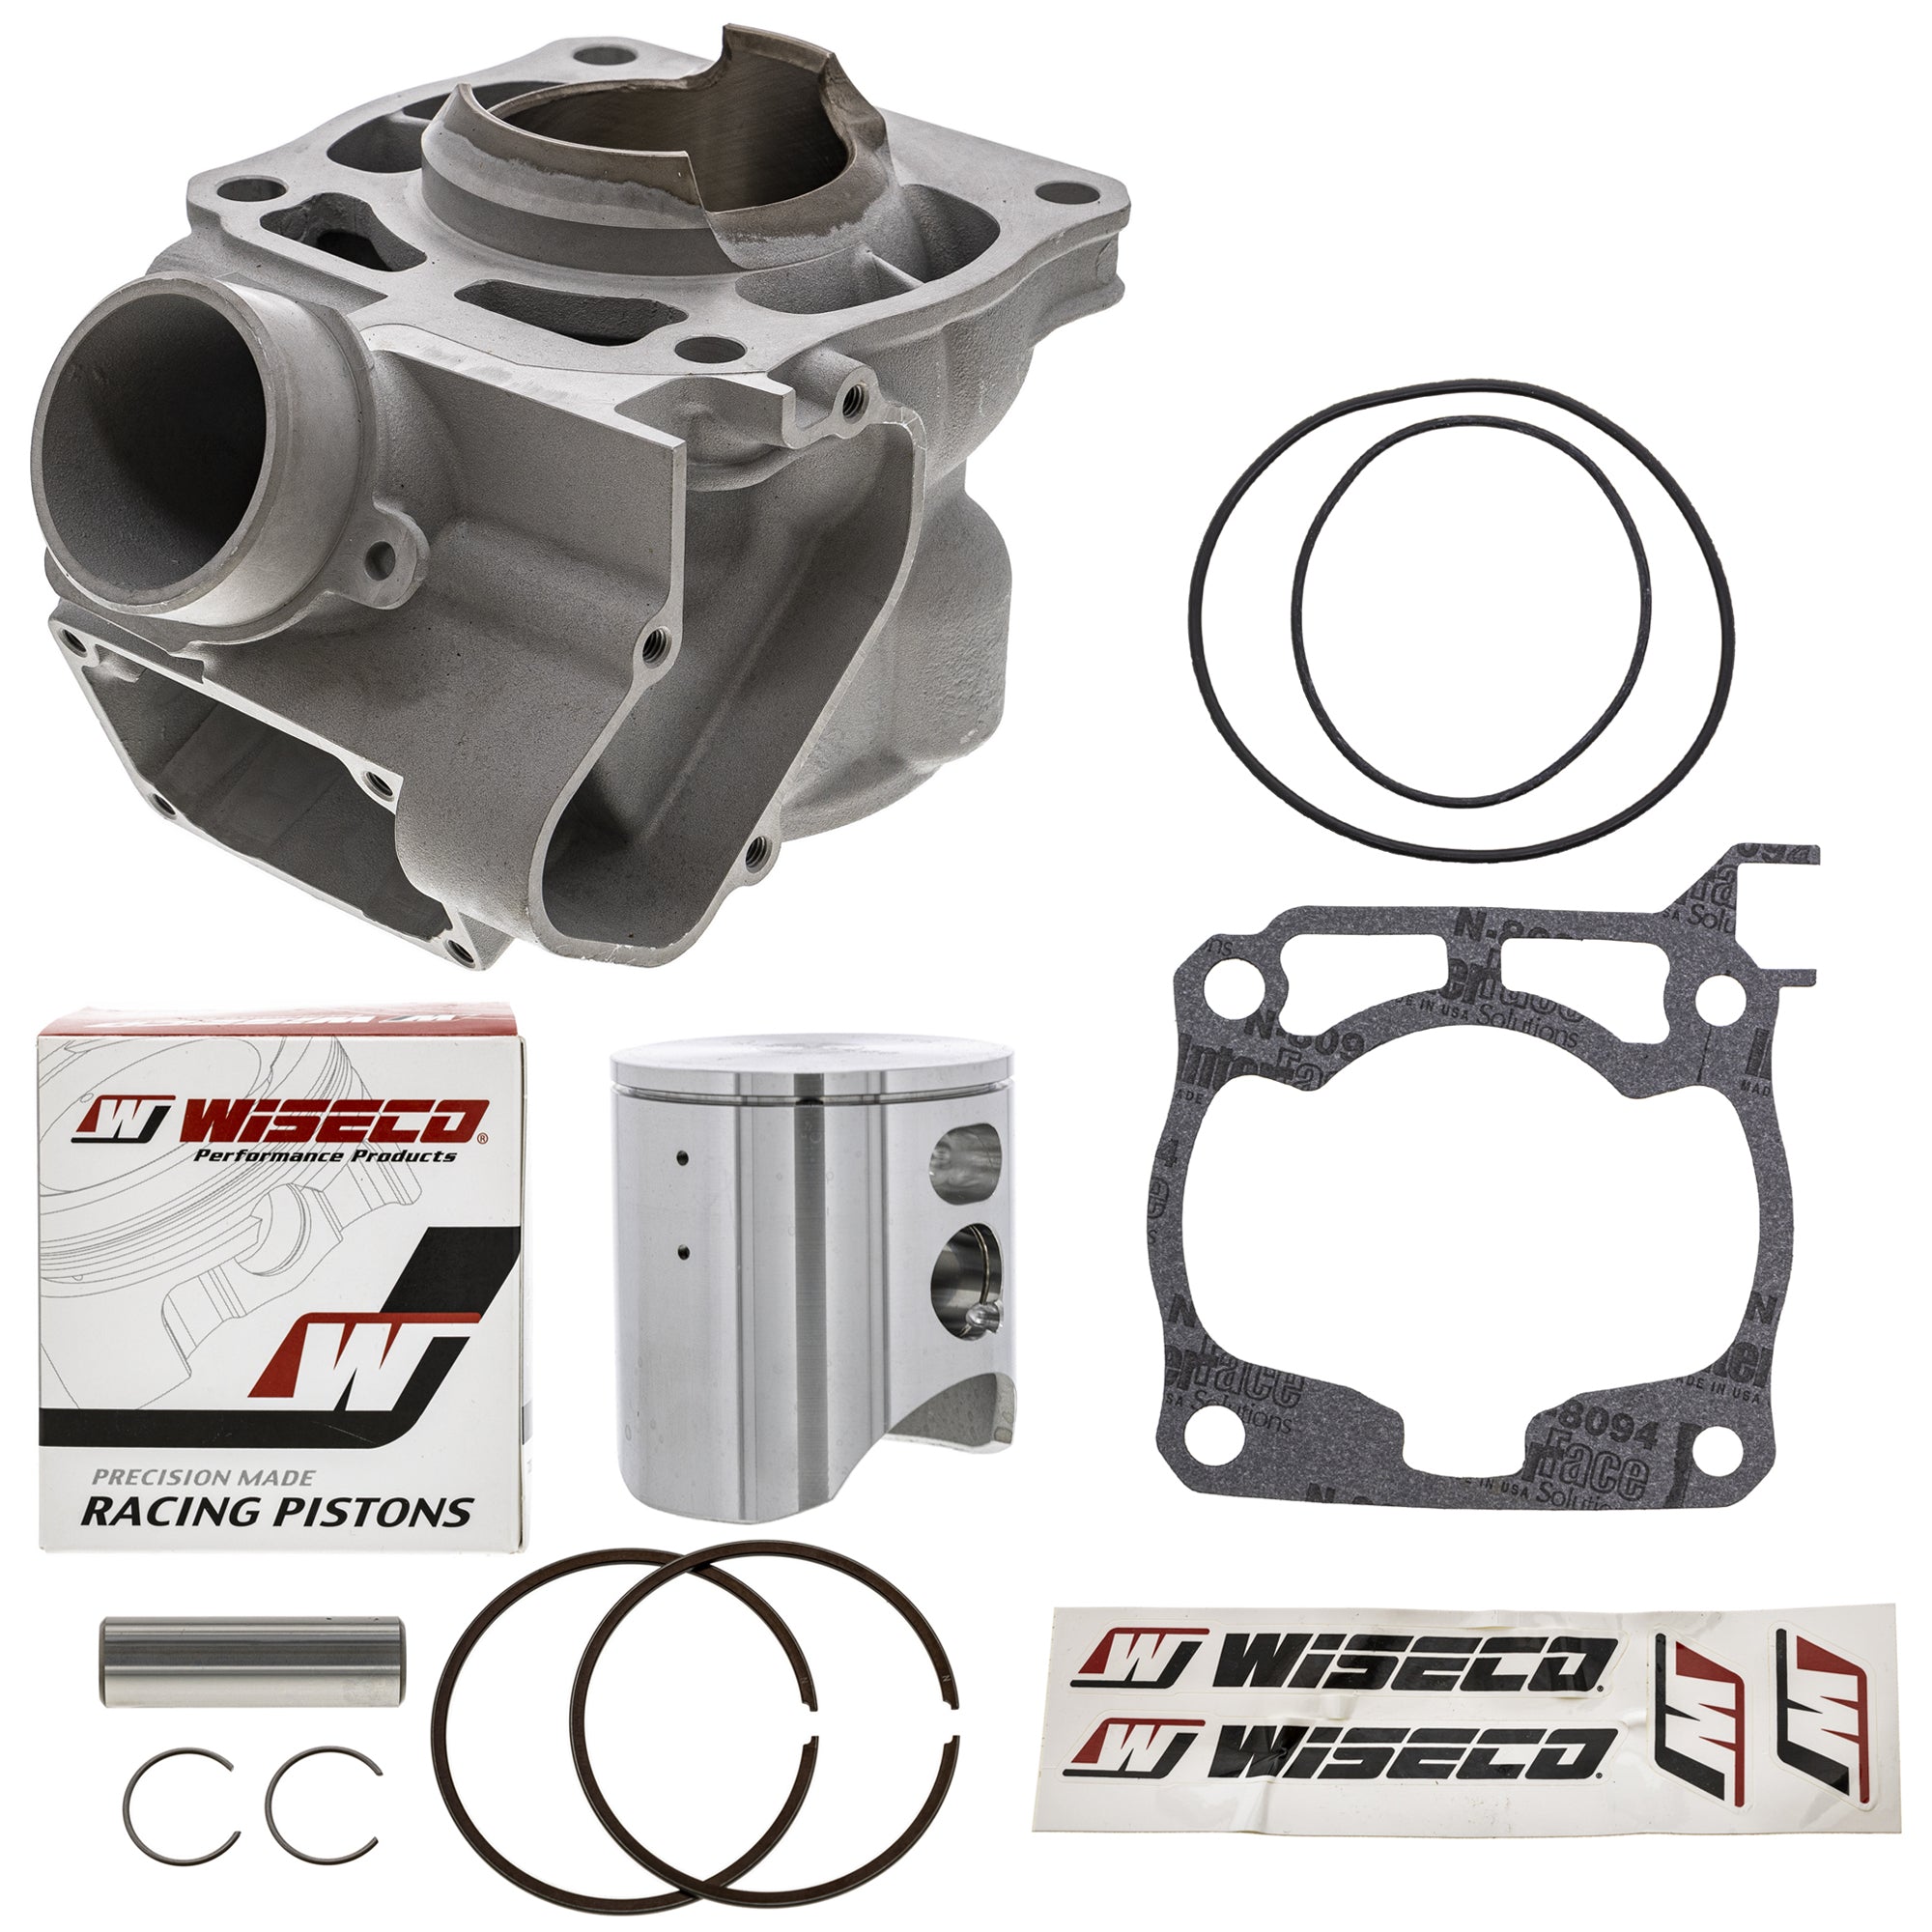 Cylinder Wiseco Piston Gasket Set Kit for zOTHER Yamaha YZ125 93450-16812-00 NICHE MK1005837